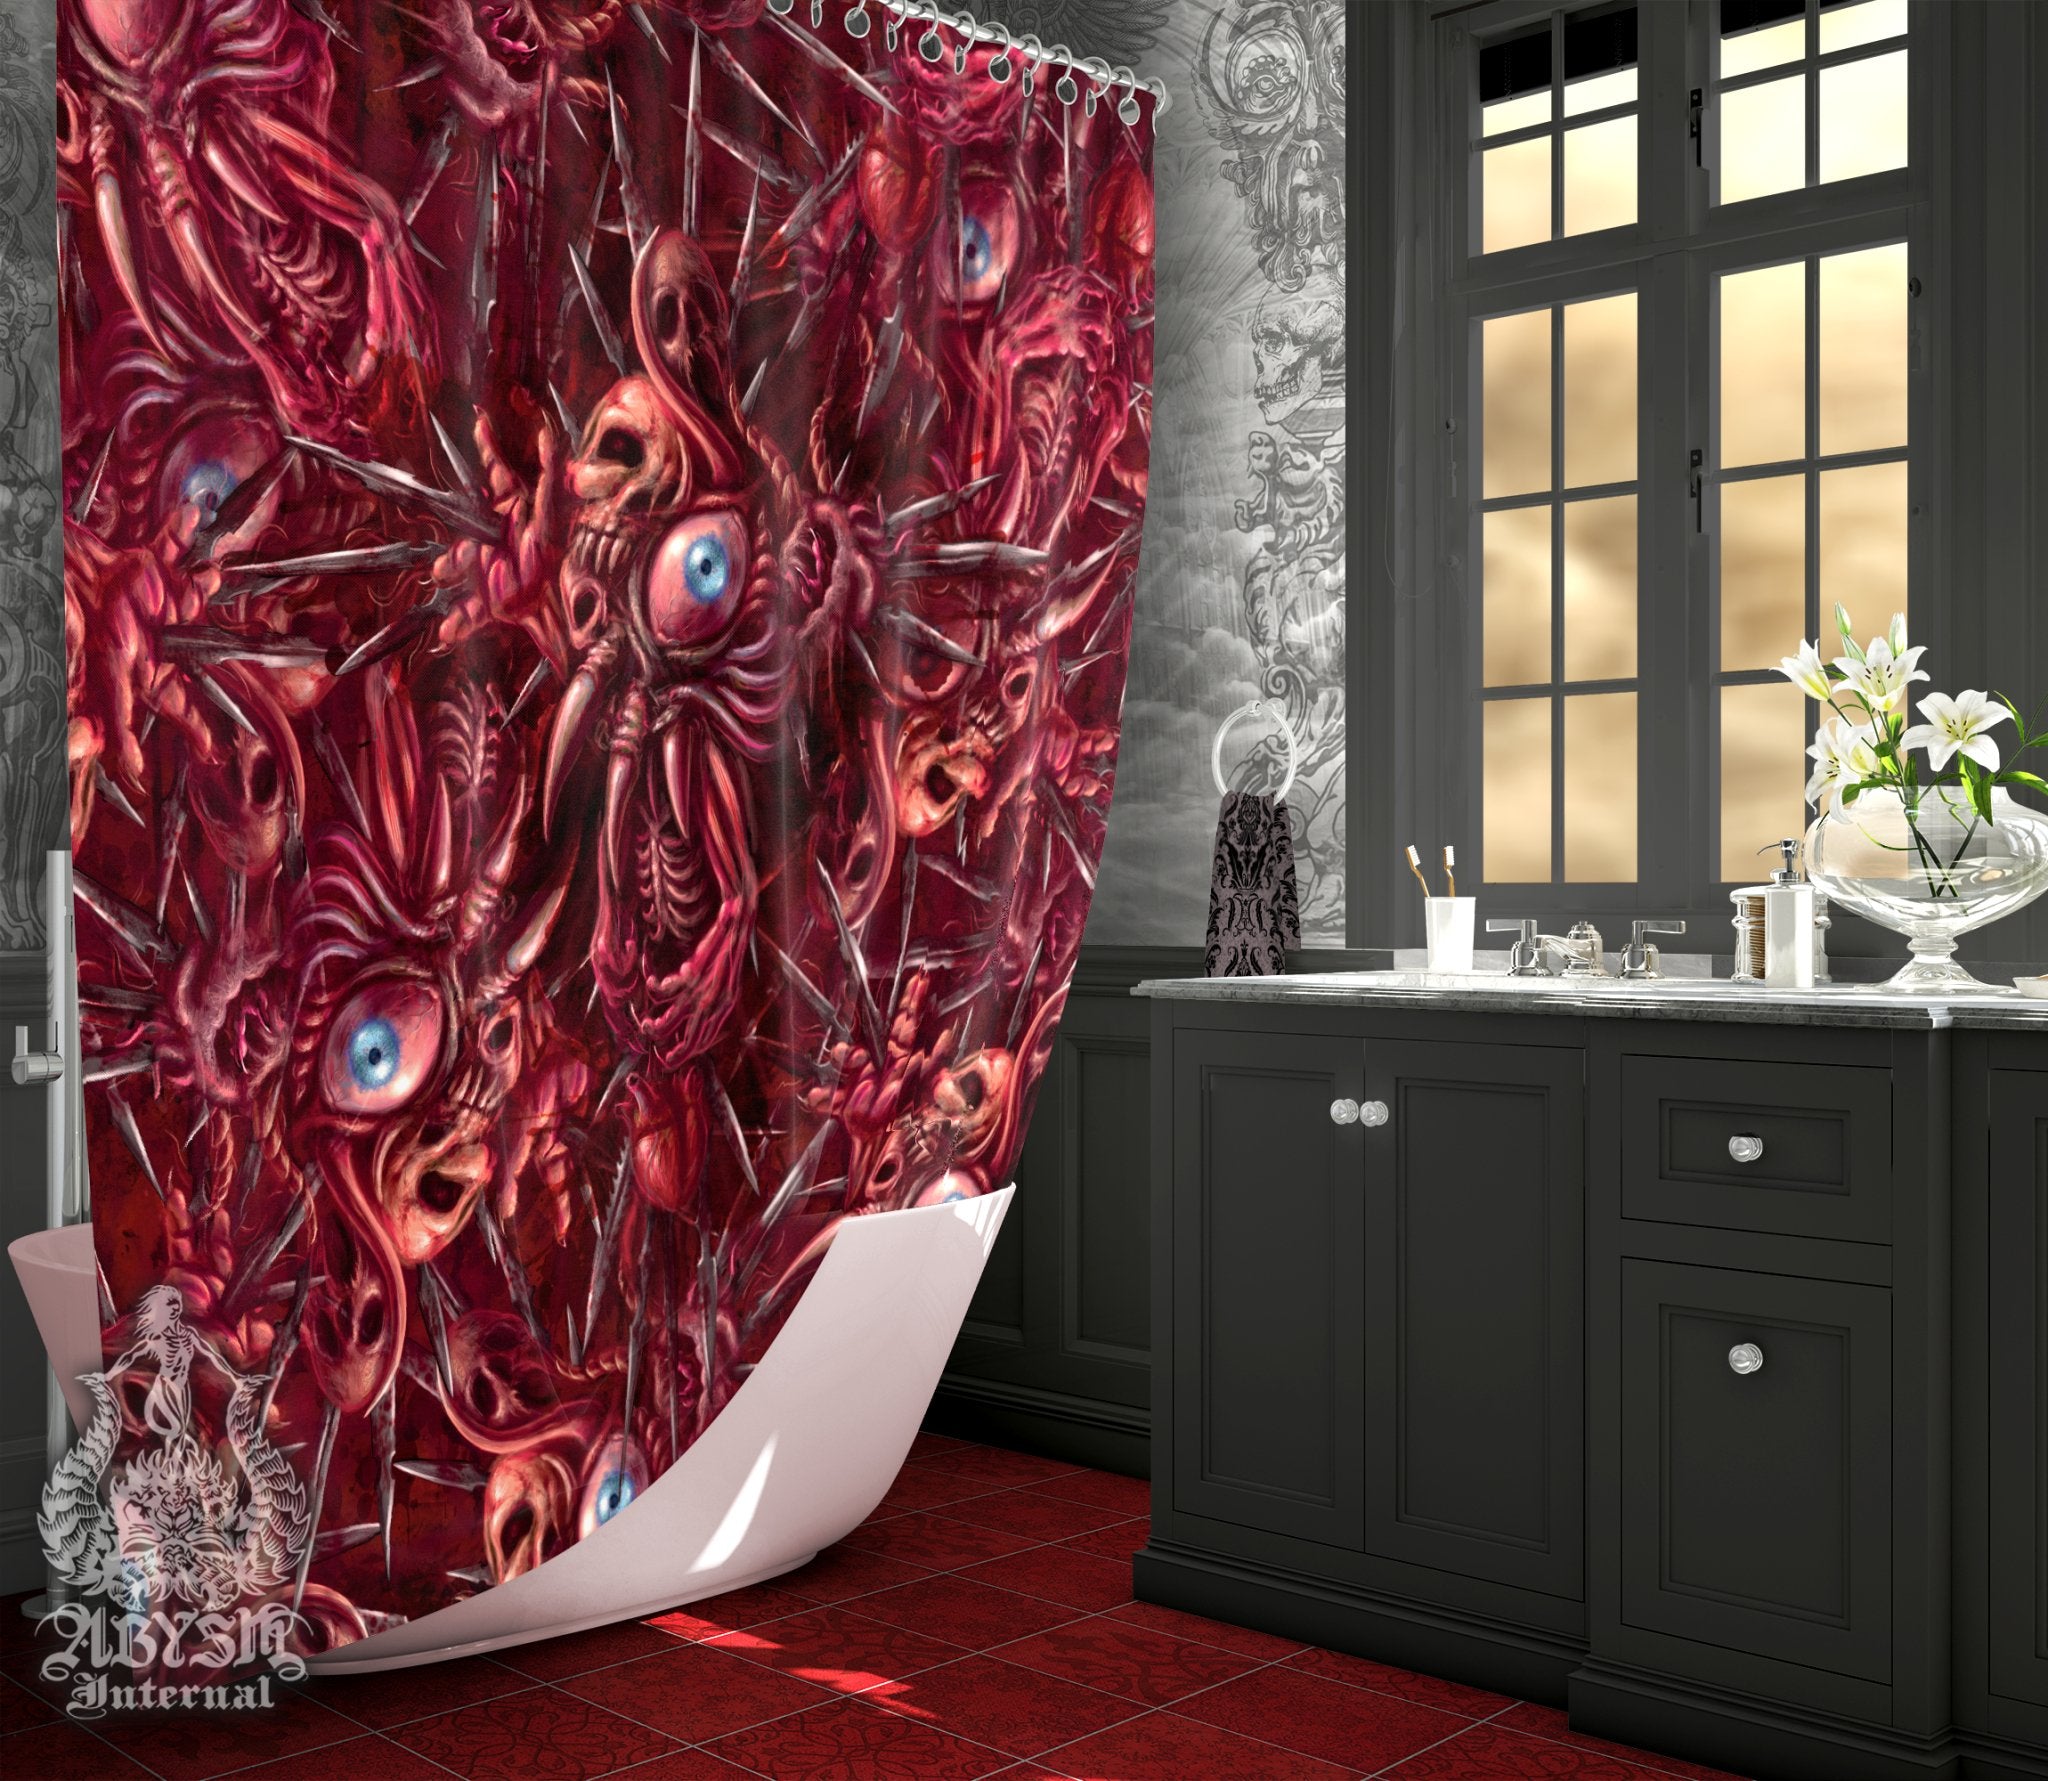 Halloween Shower Curtain, 71x74 inches, Eyeballs Horror Bathroom Decor, Gore Monster - Blood Cross - Abysm Internal